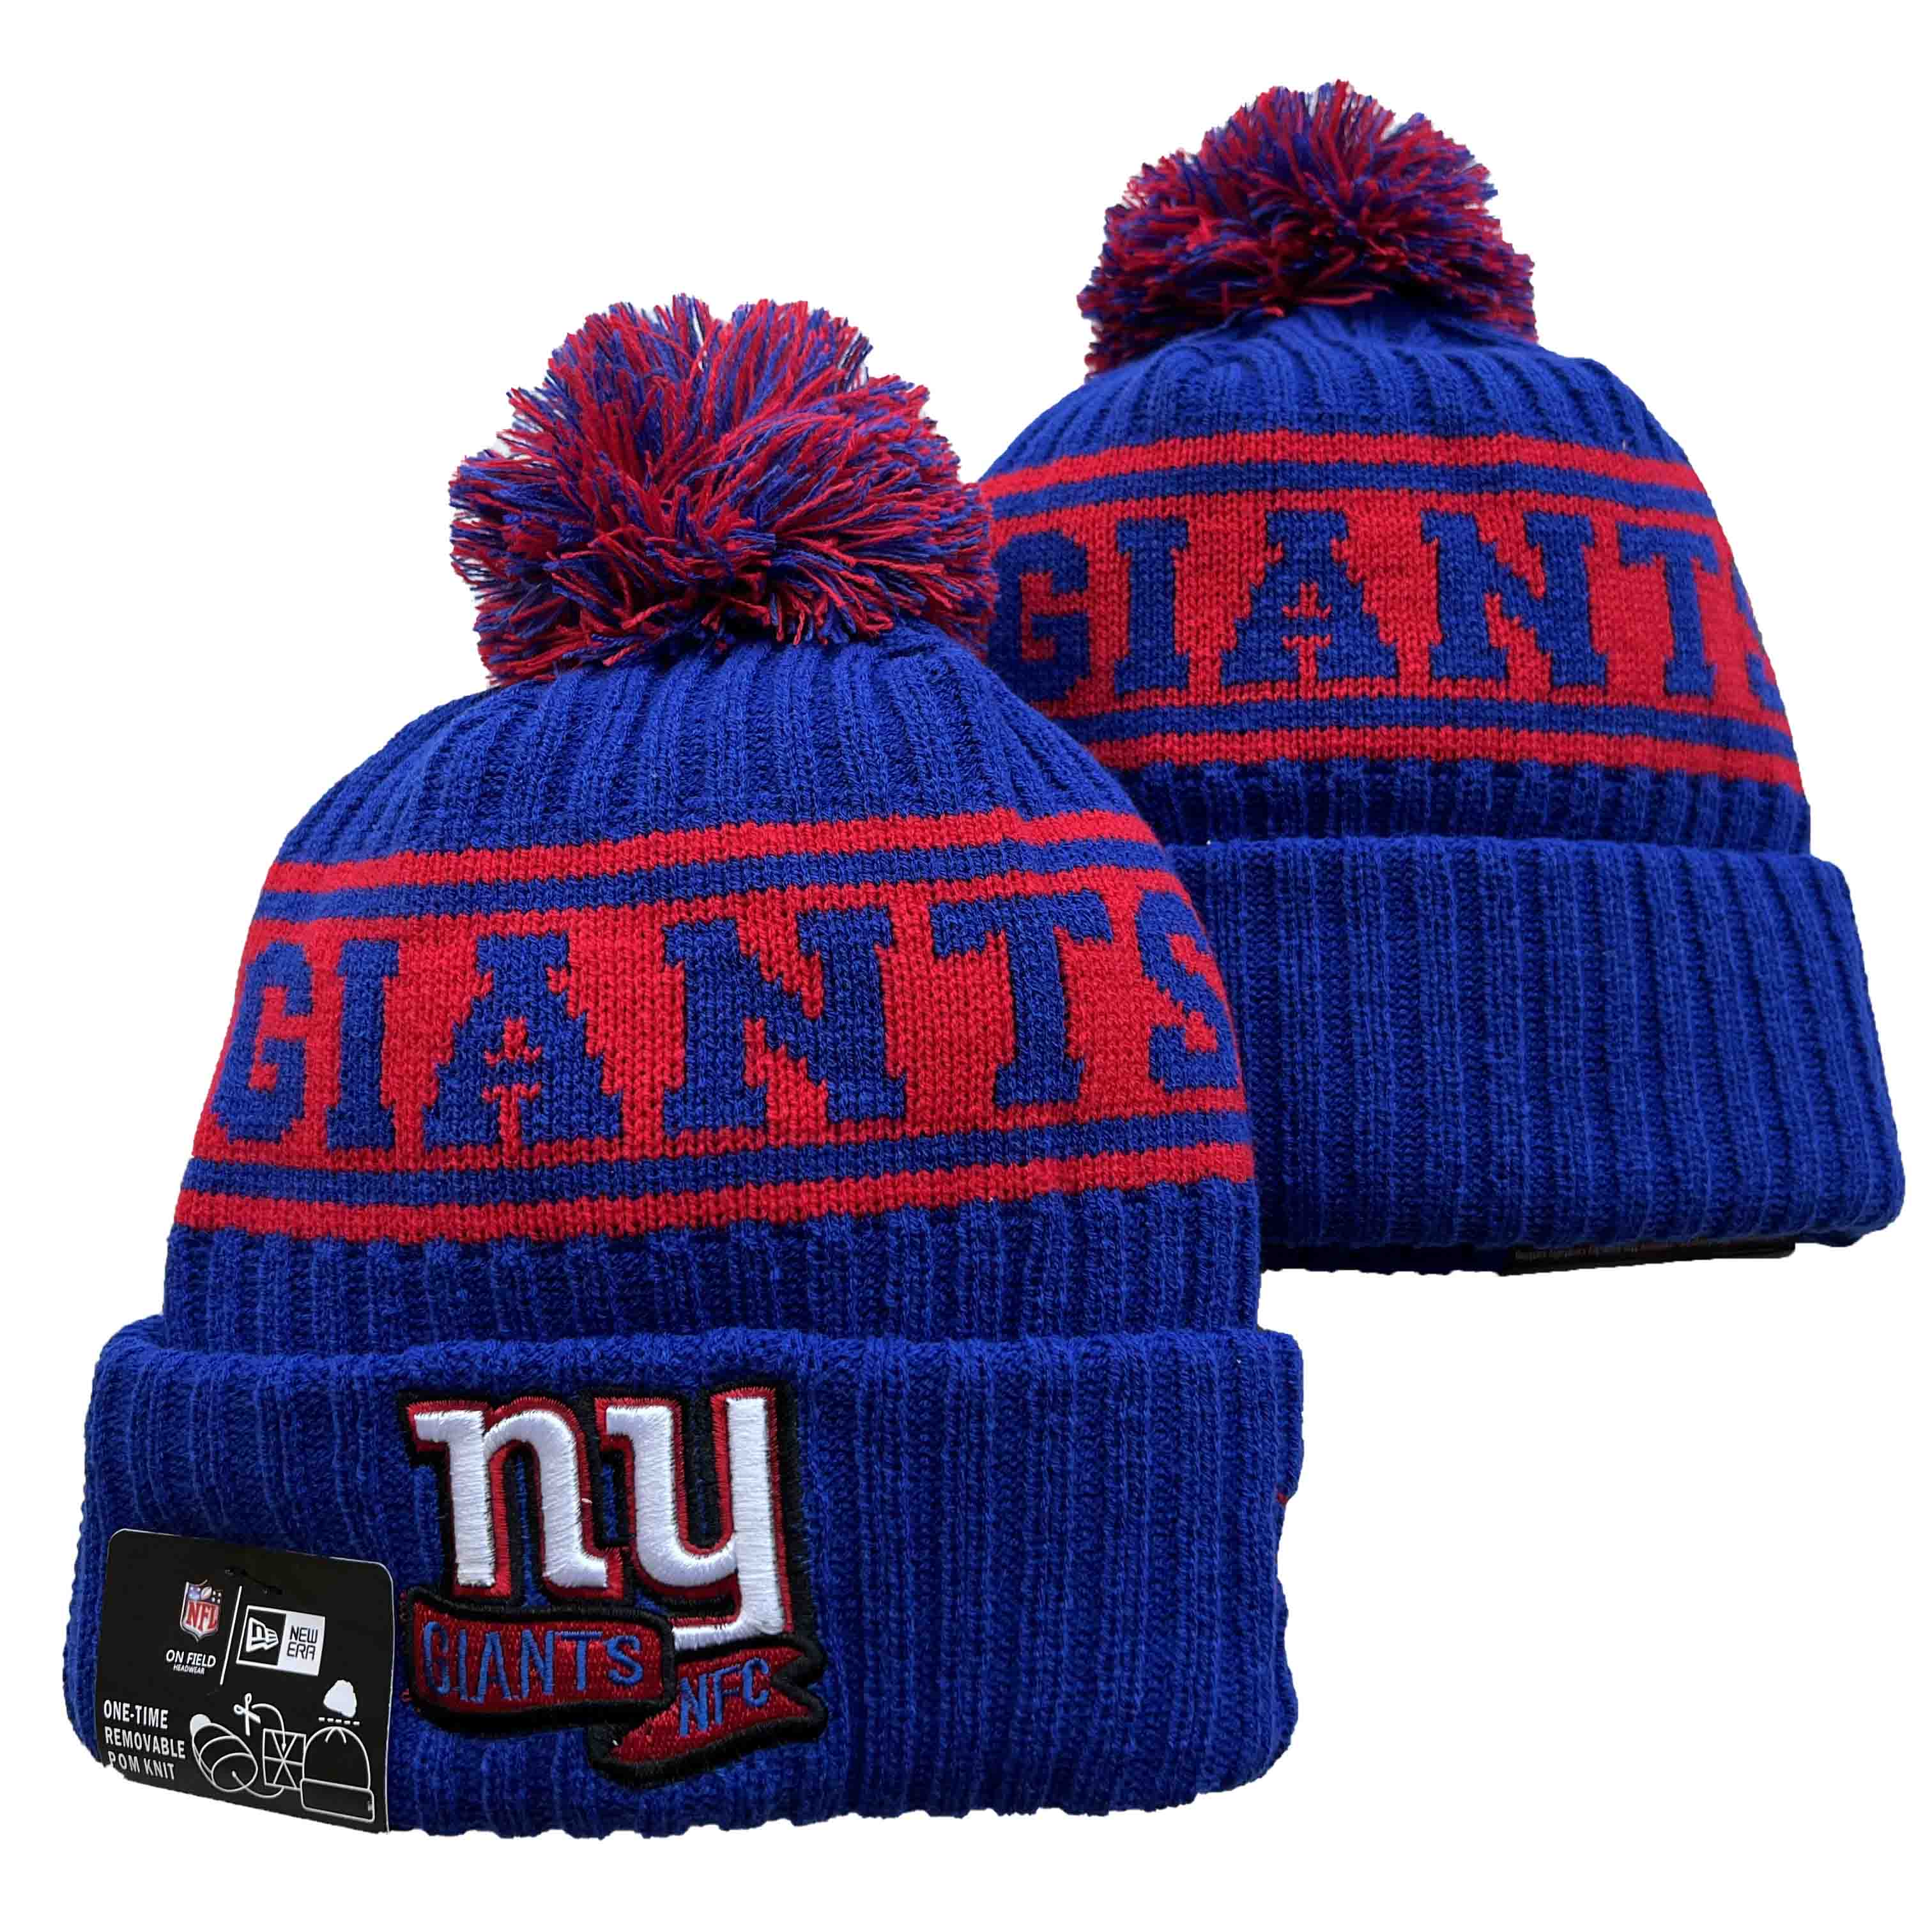 New York Giants Knit Hats 0115